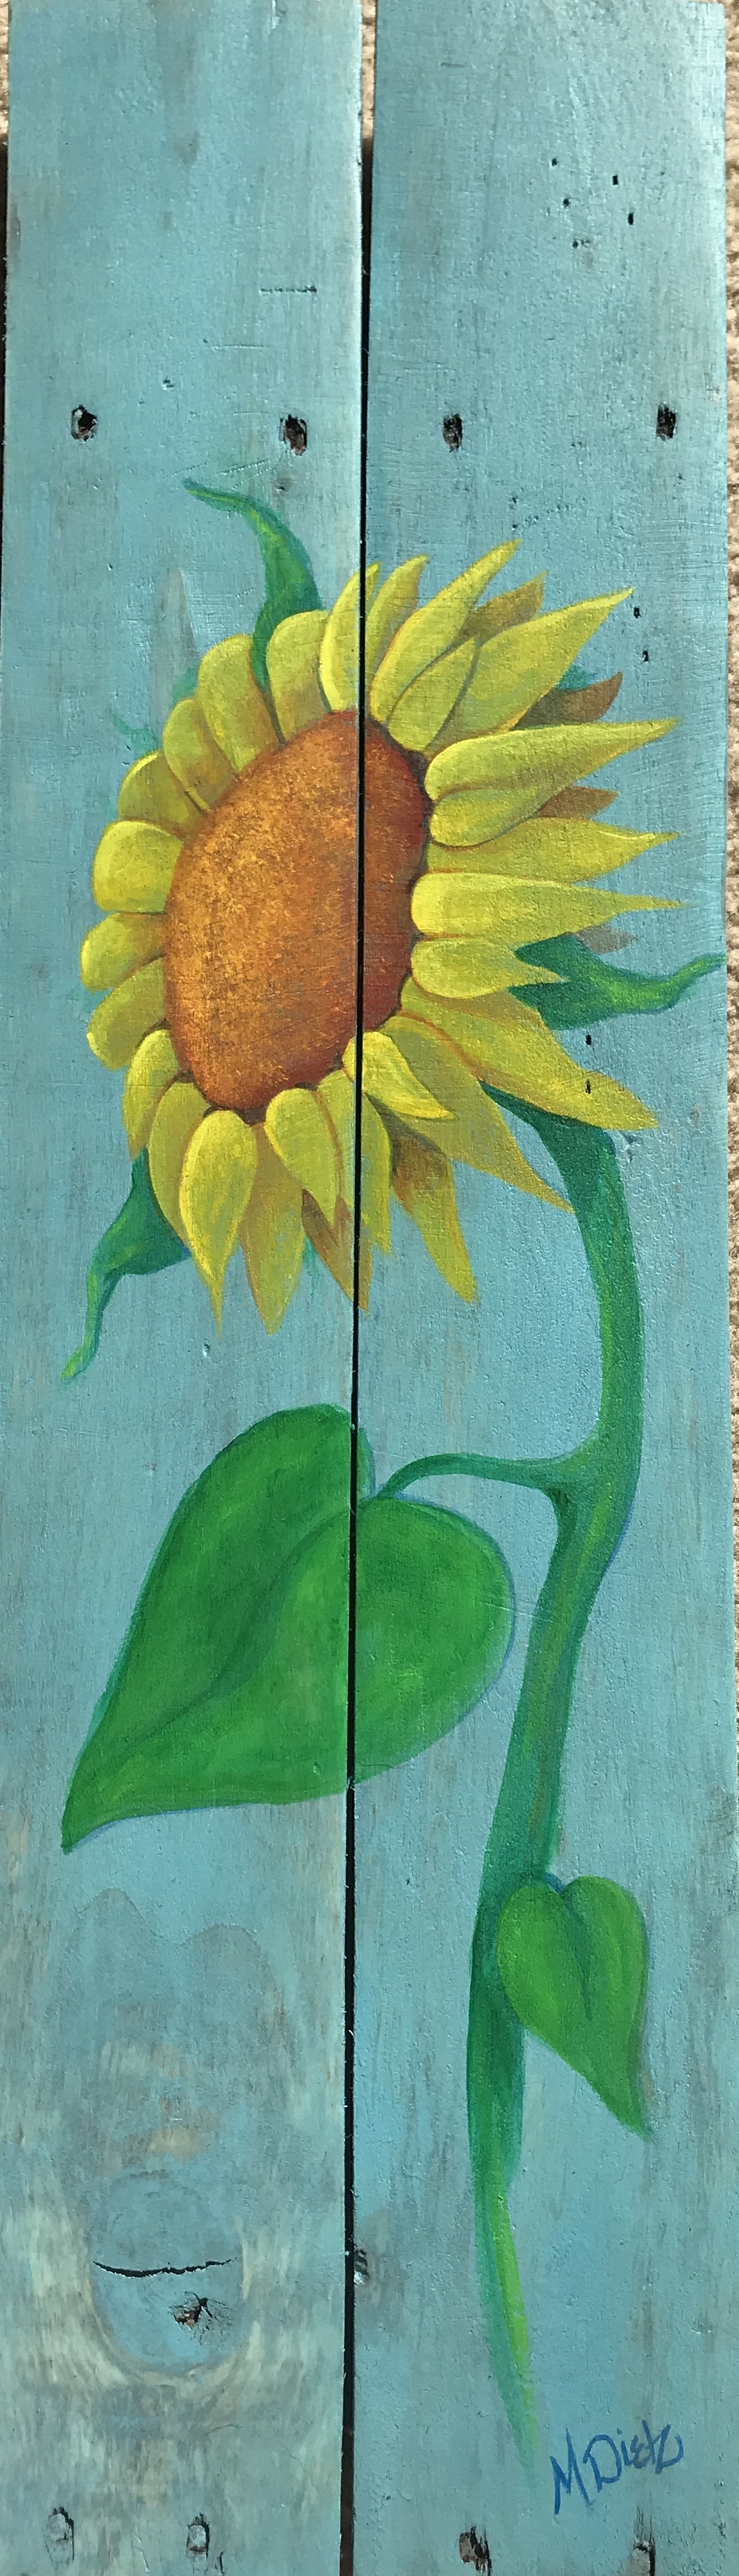 sunflowerblue.JPG